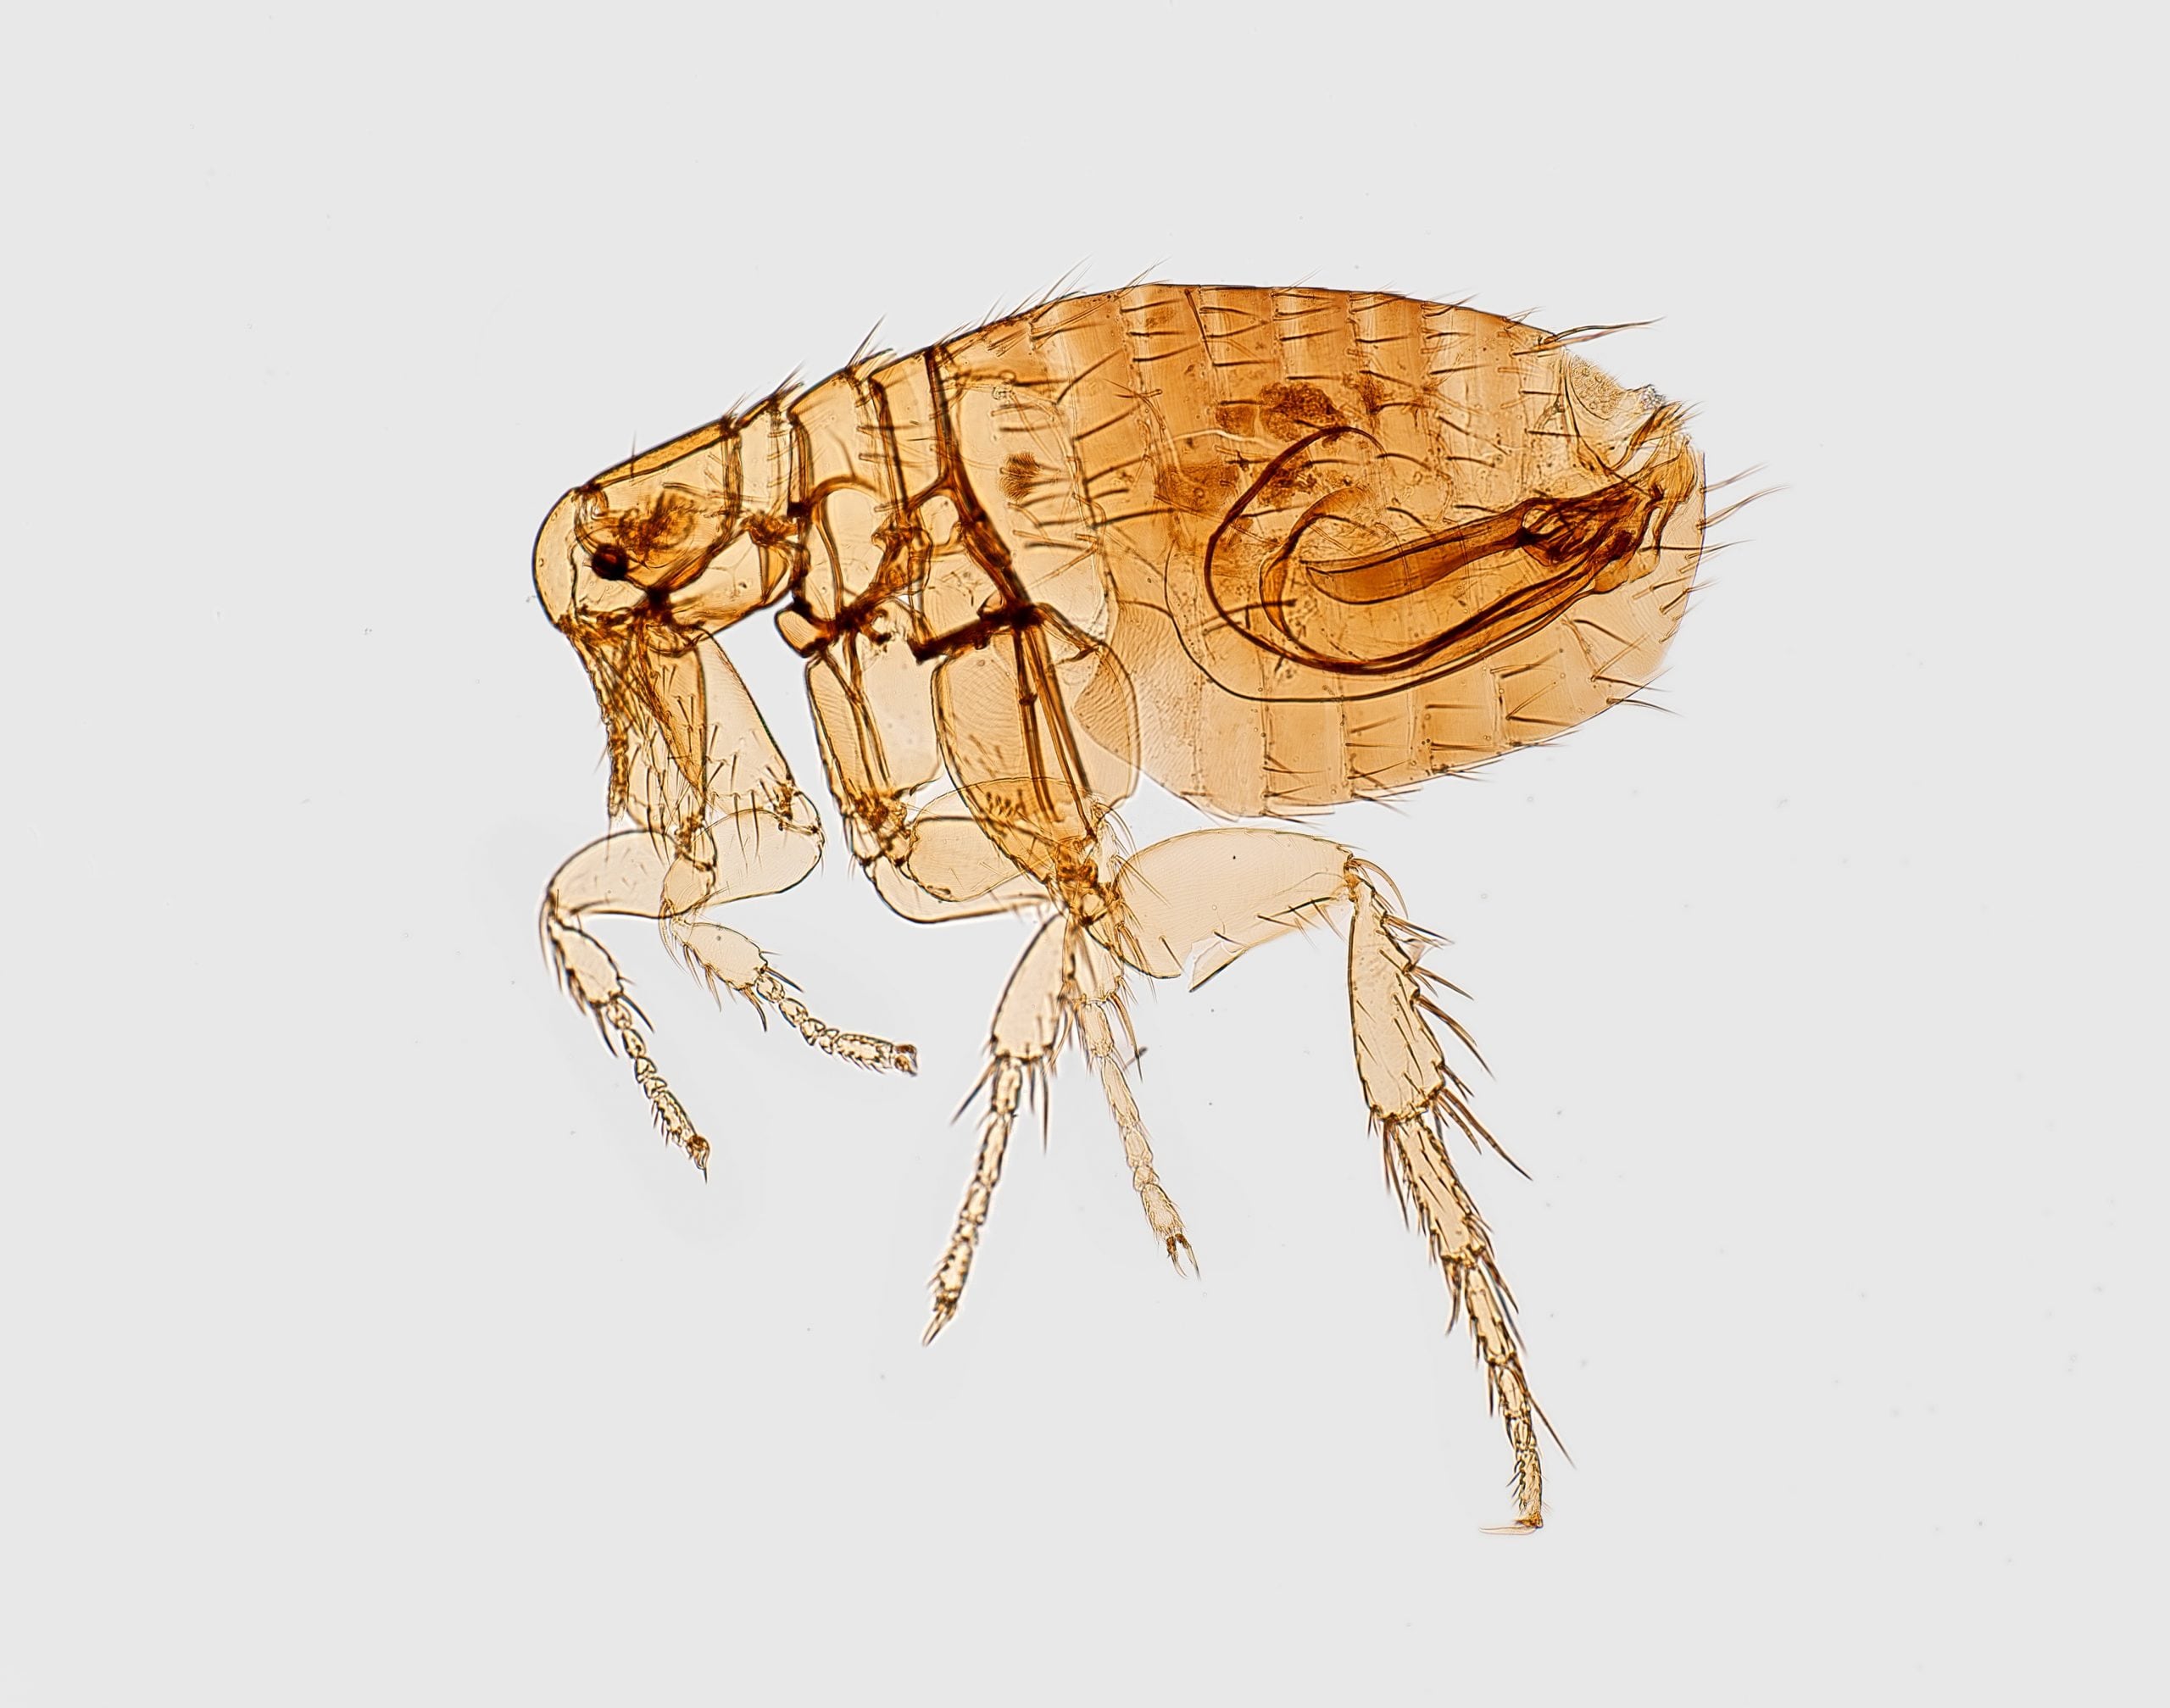 flea viewed under microscope